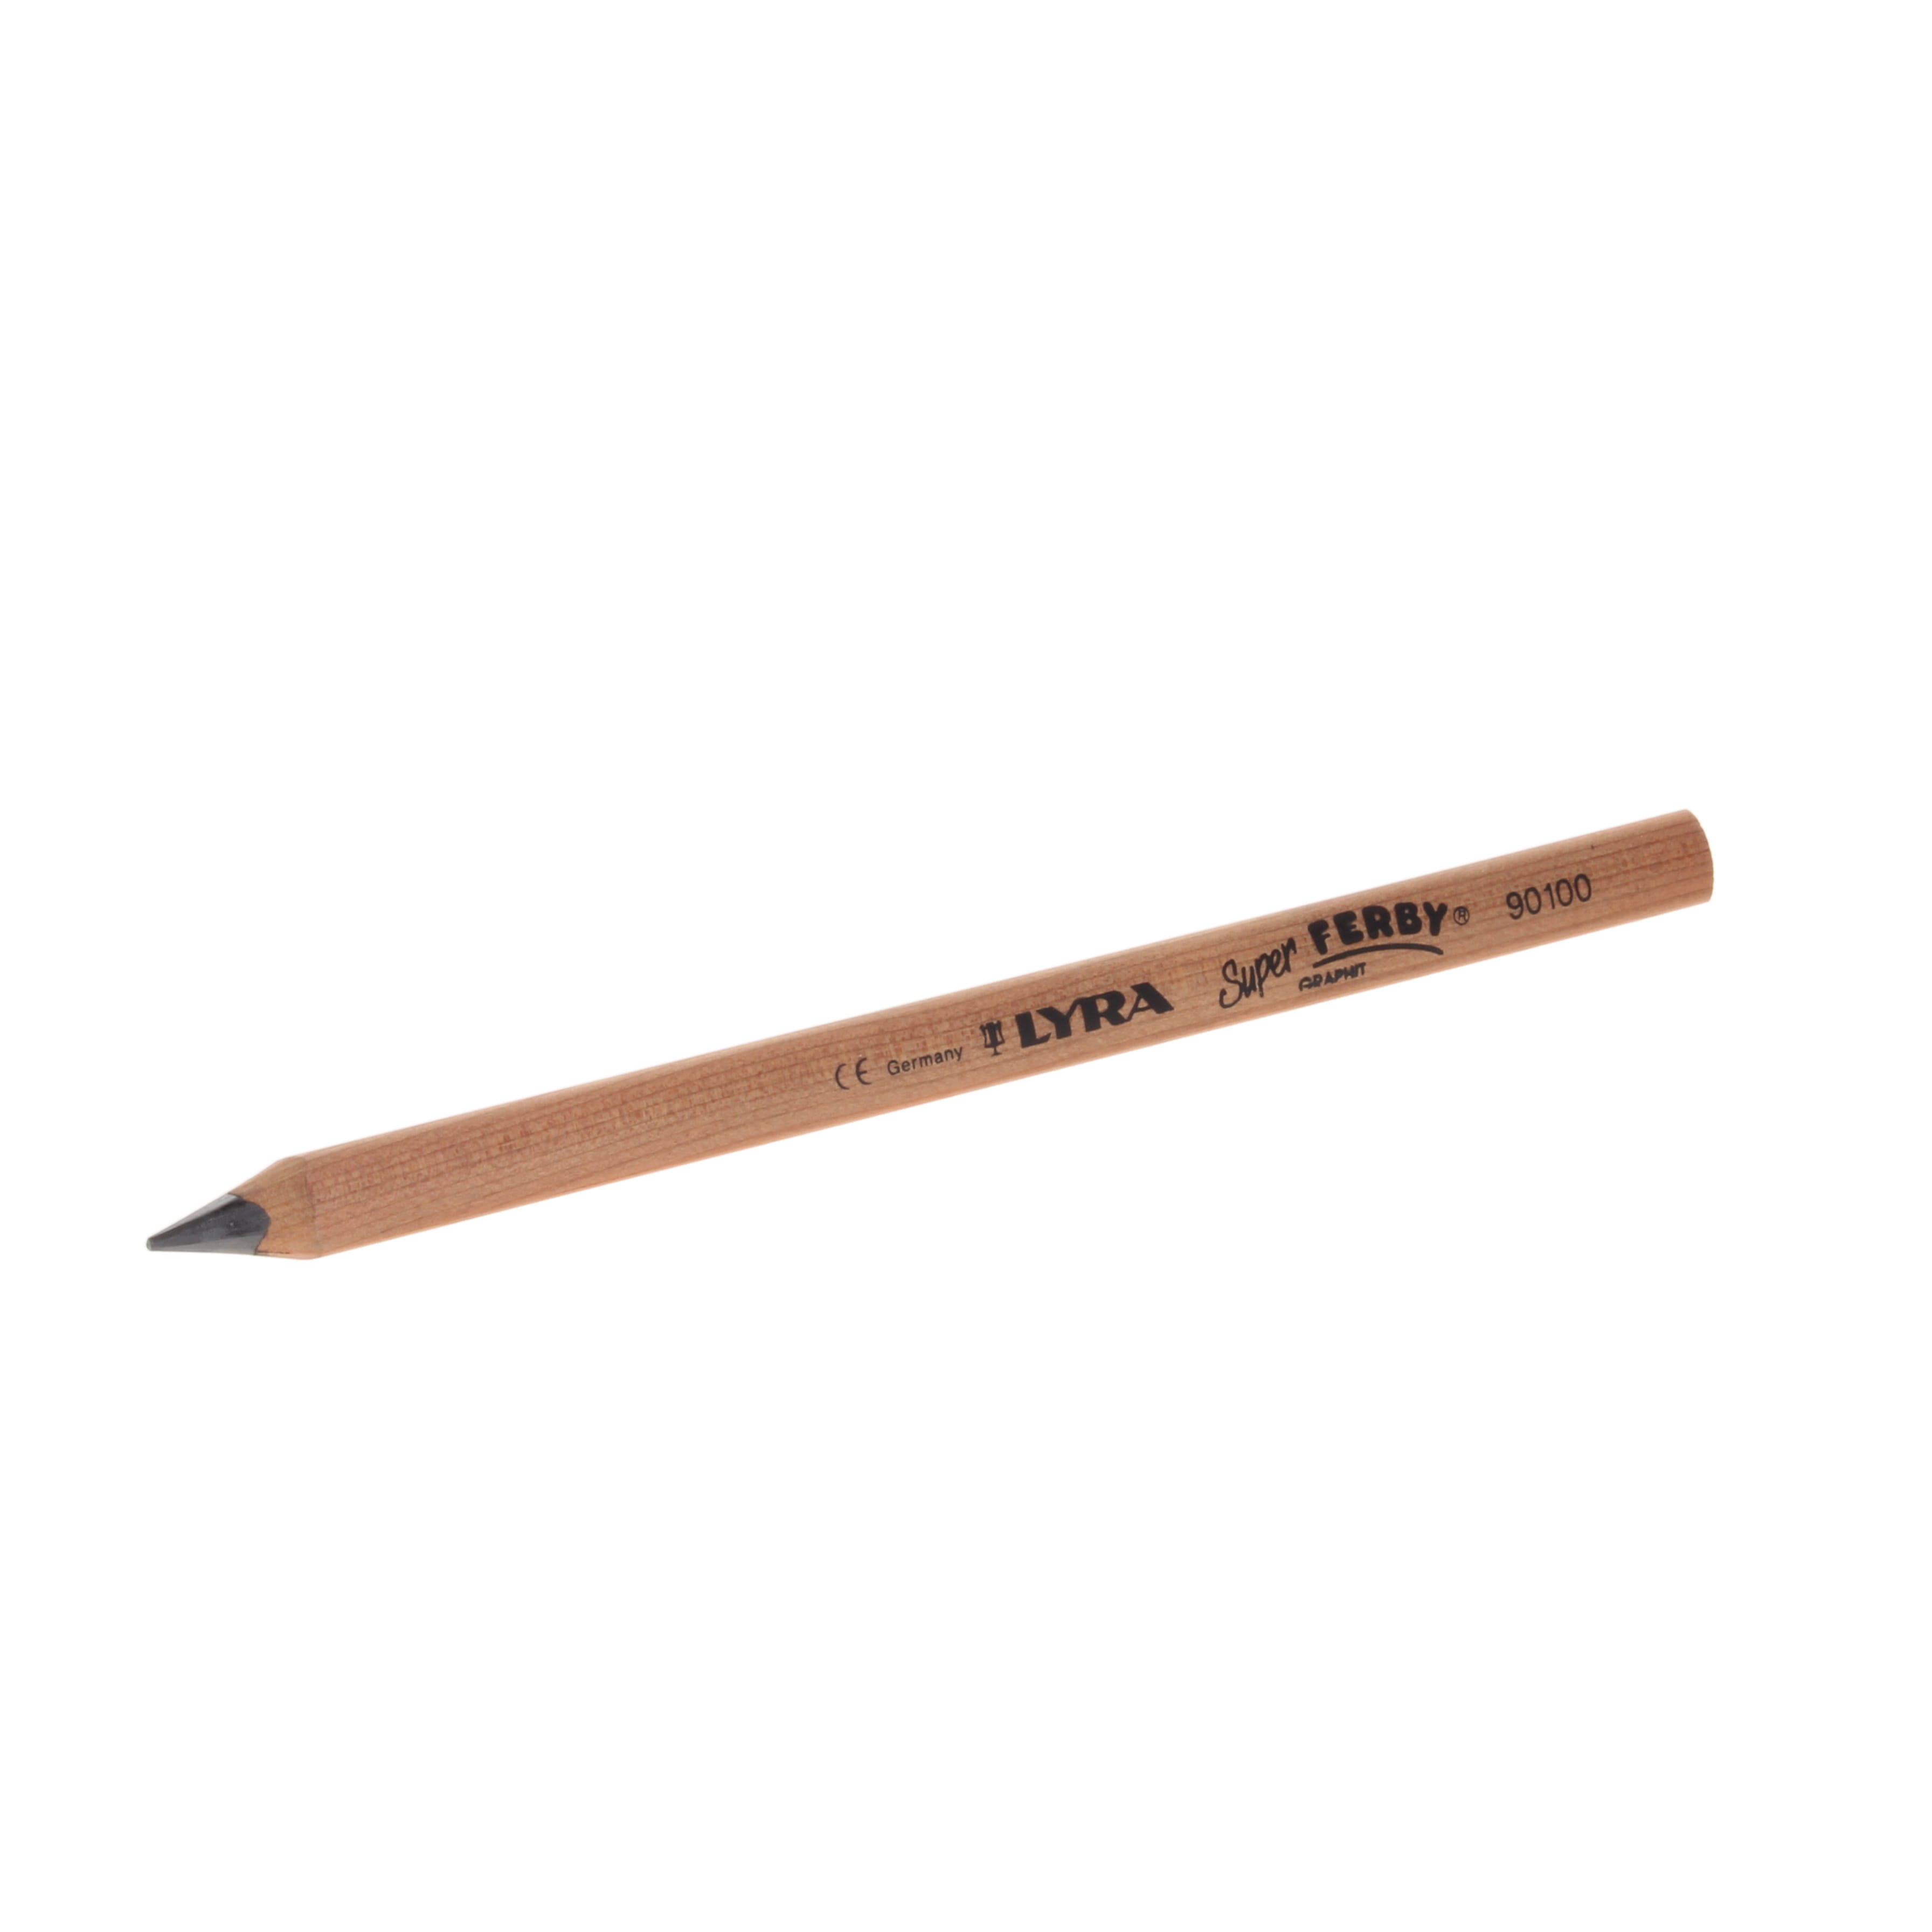 Lyra Super Ferby HB Graphite Full Length Pencils - pack of 12